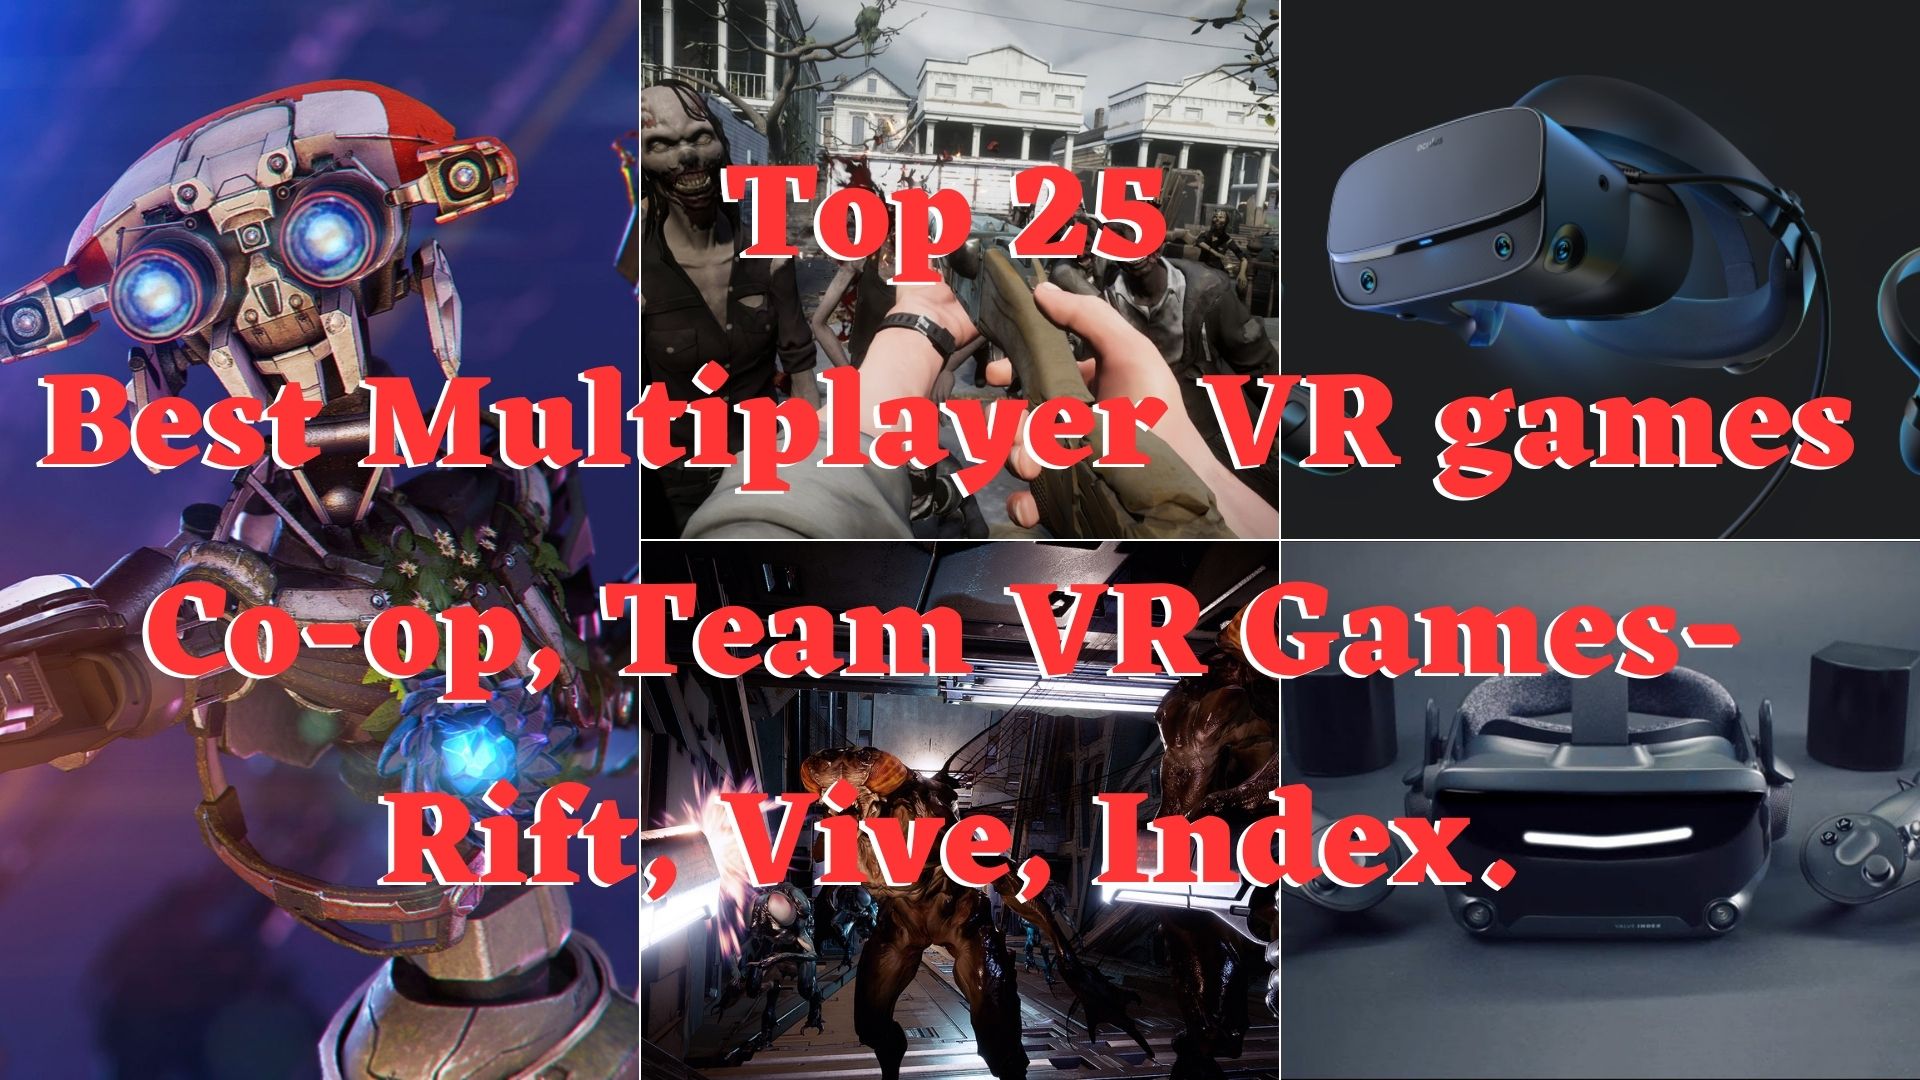 Top 25 BEST MULTIPLAYER VR GAMES COOP/Team VR Games